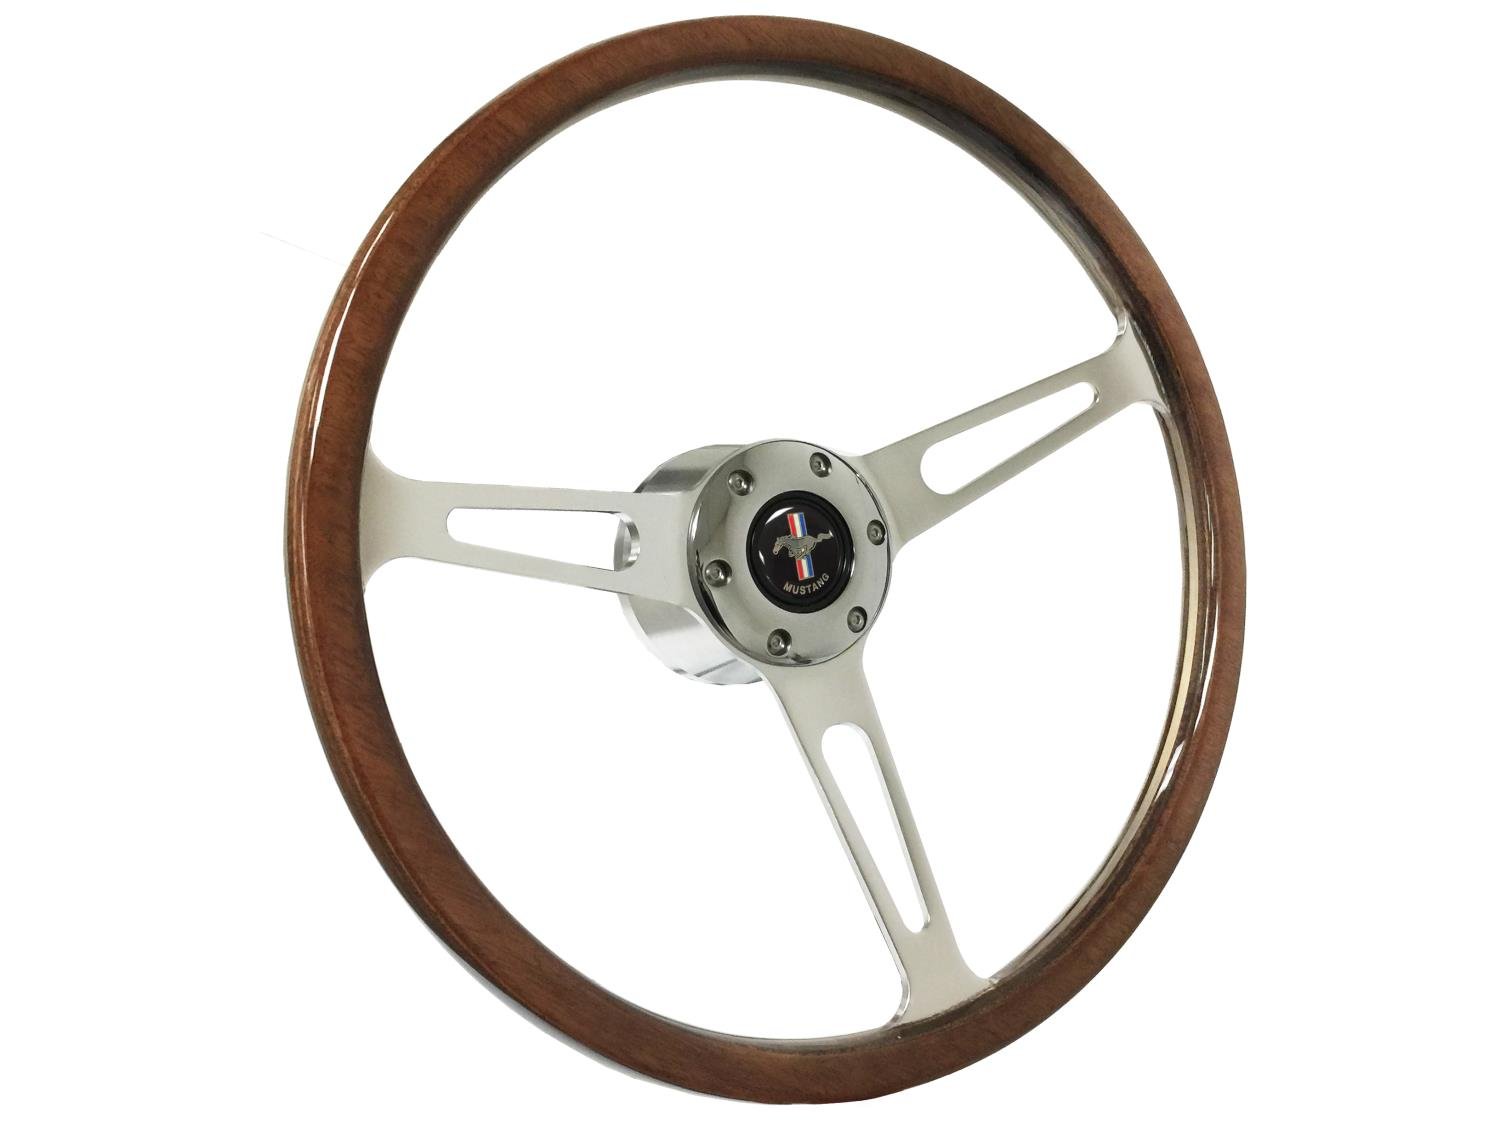 S6 Classic Steering Wheel Kit 1968-1991 Ford/Mercury, 15 in. Diameter, Deluxe Walnut Wood Grip, w/ 6-Bolt Adapter & Horn Button